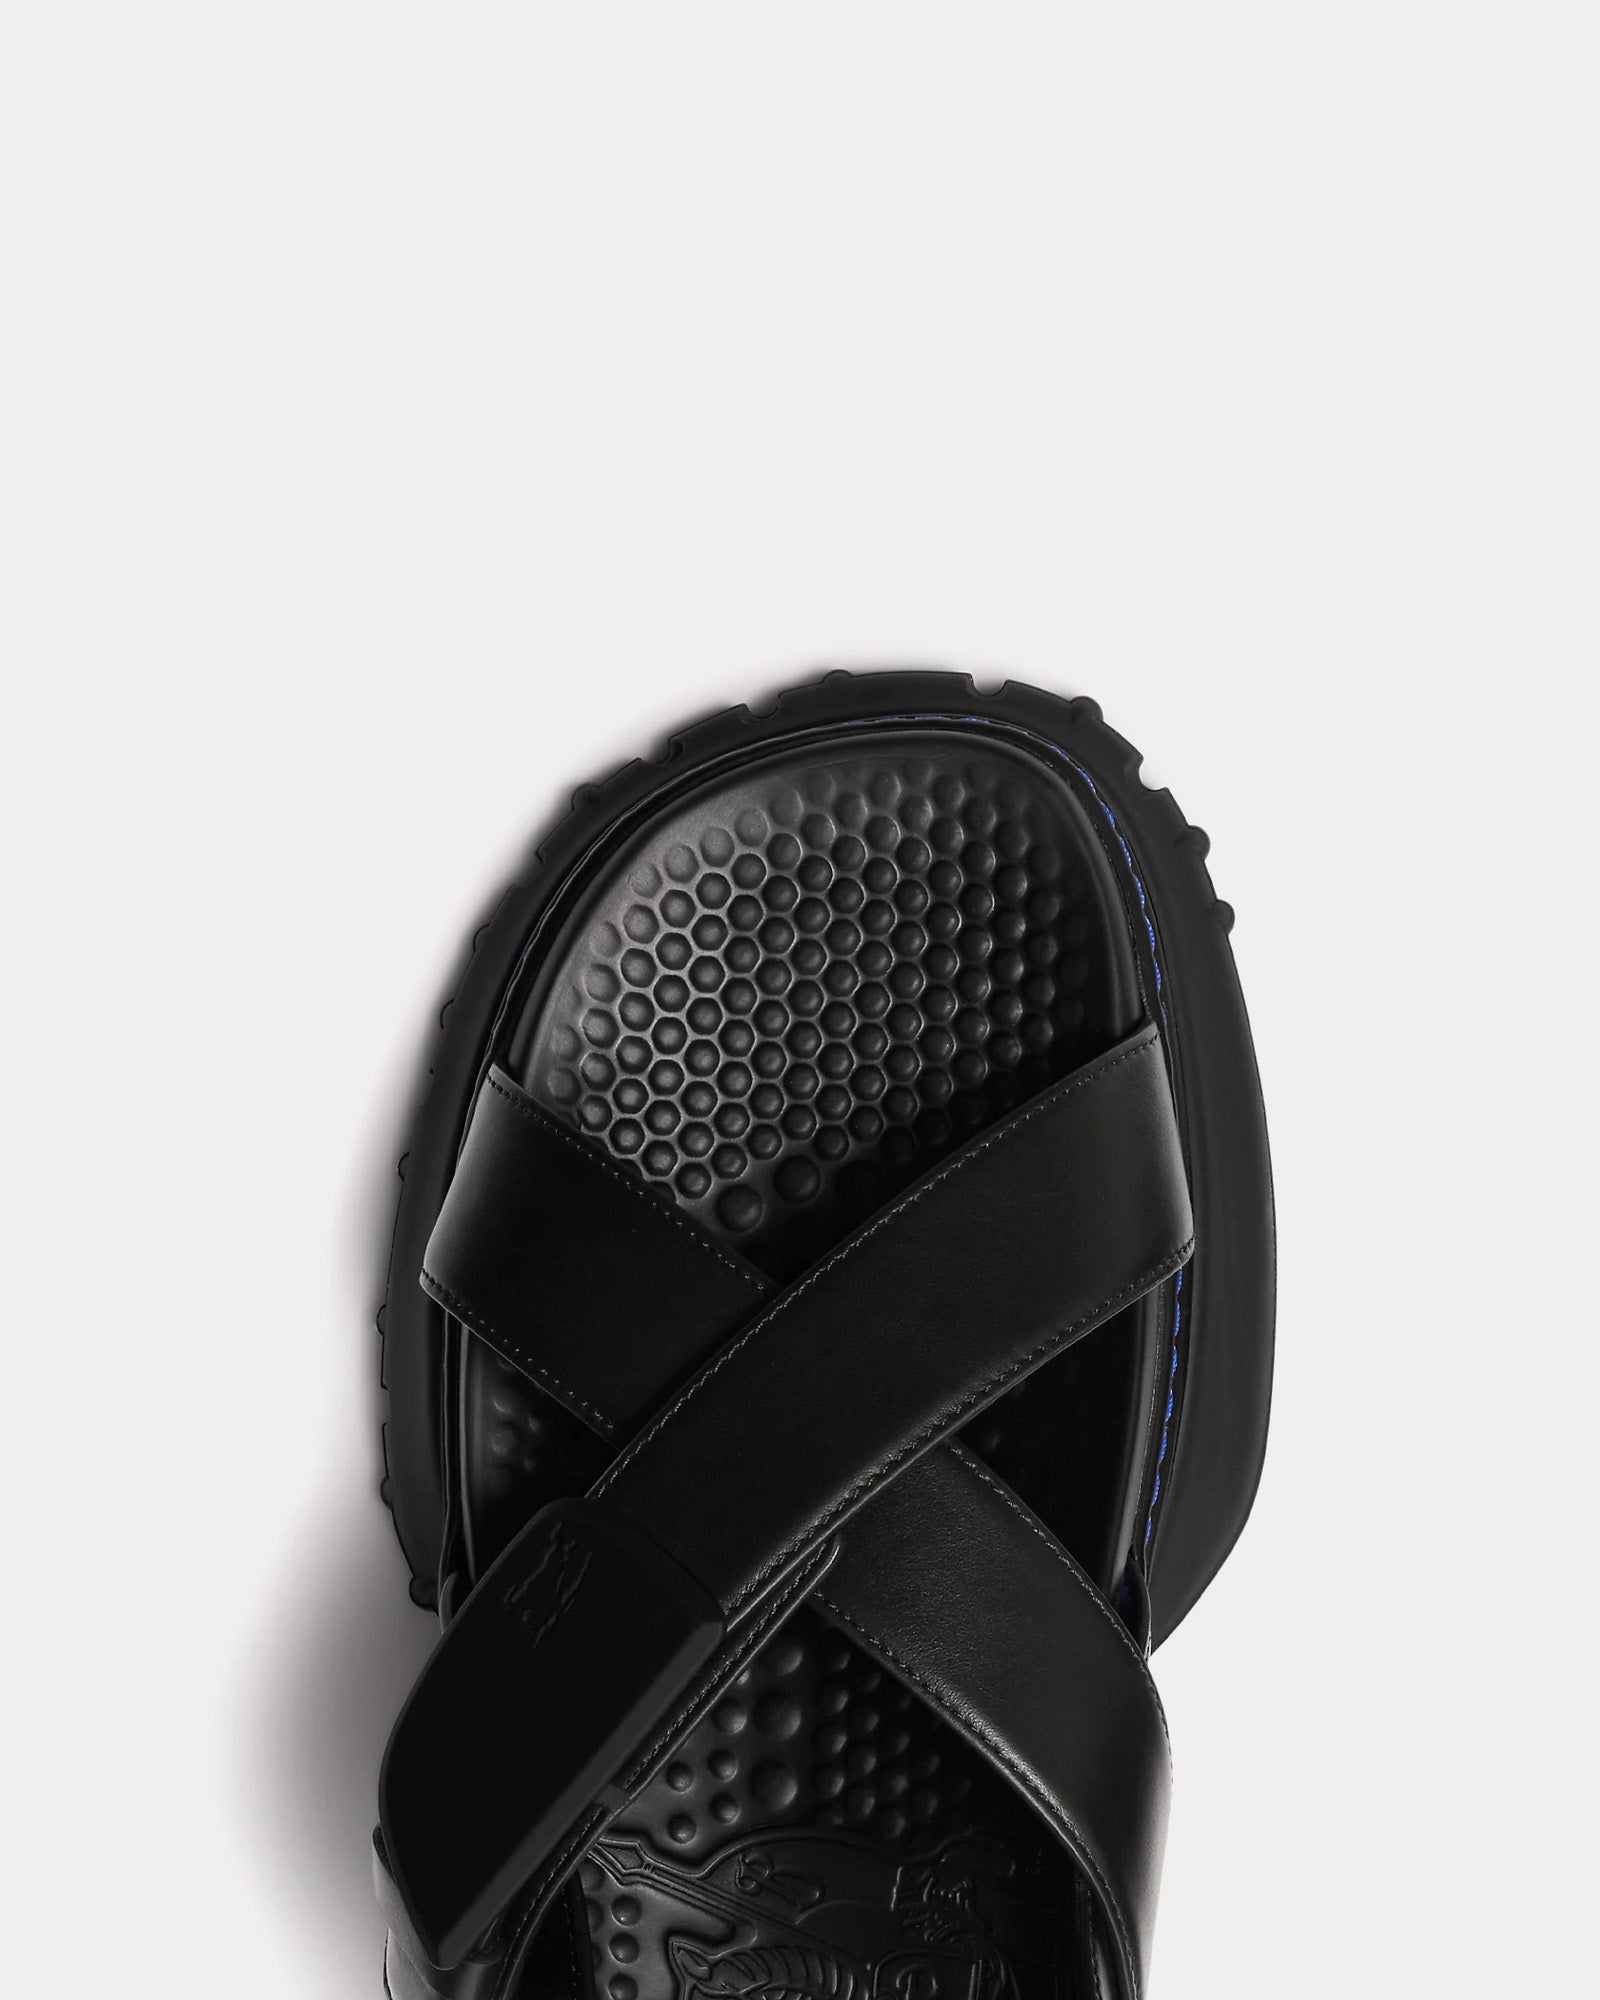 Burberry - Pebble Leather Black Sandals